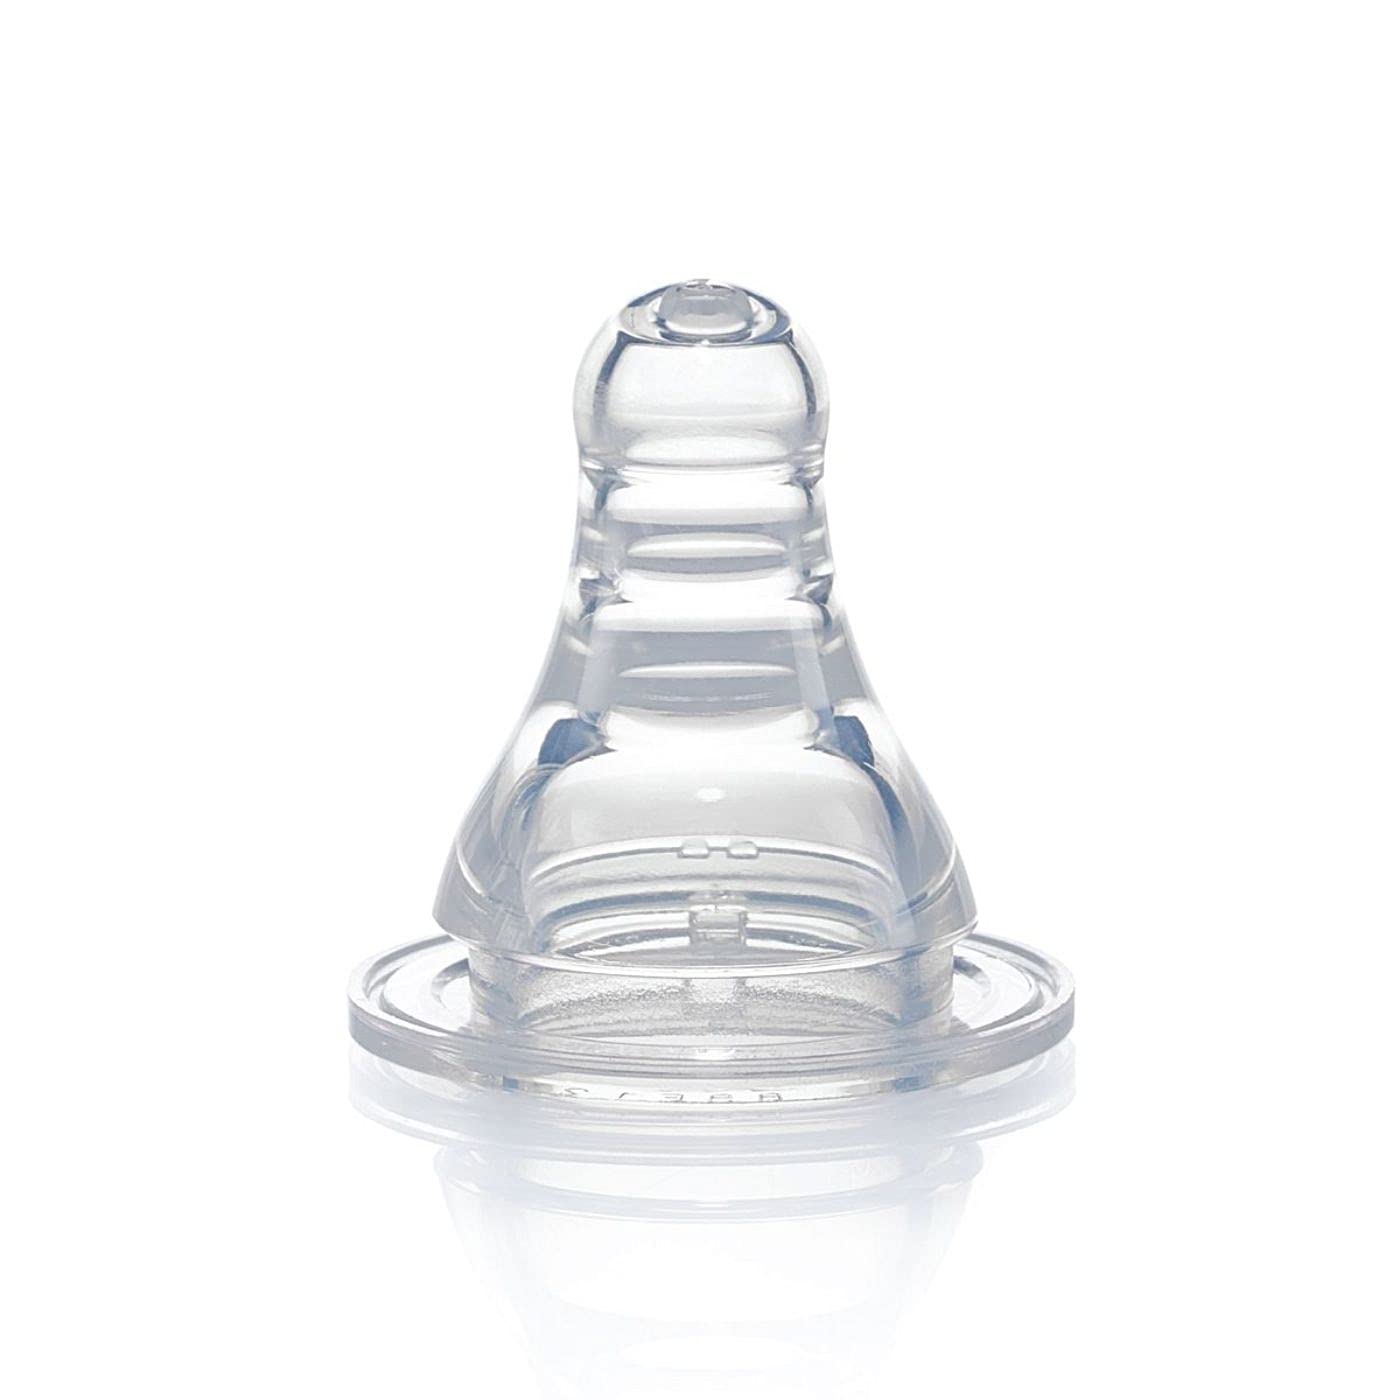 5 Cm Baby Bottle Silicone Nipple